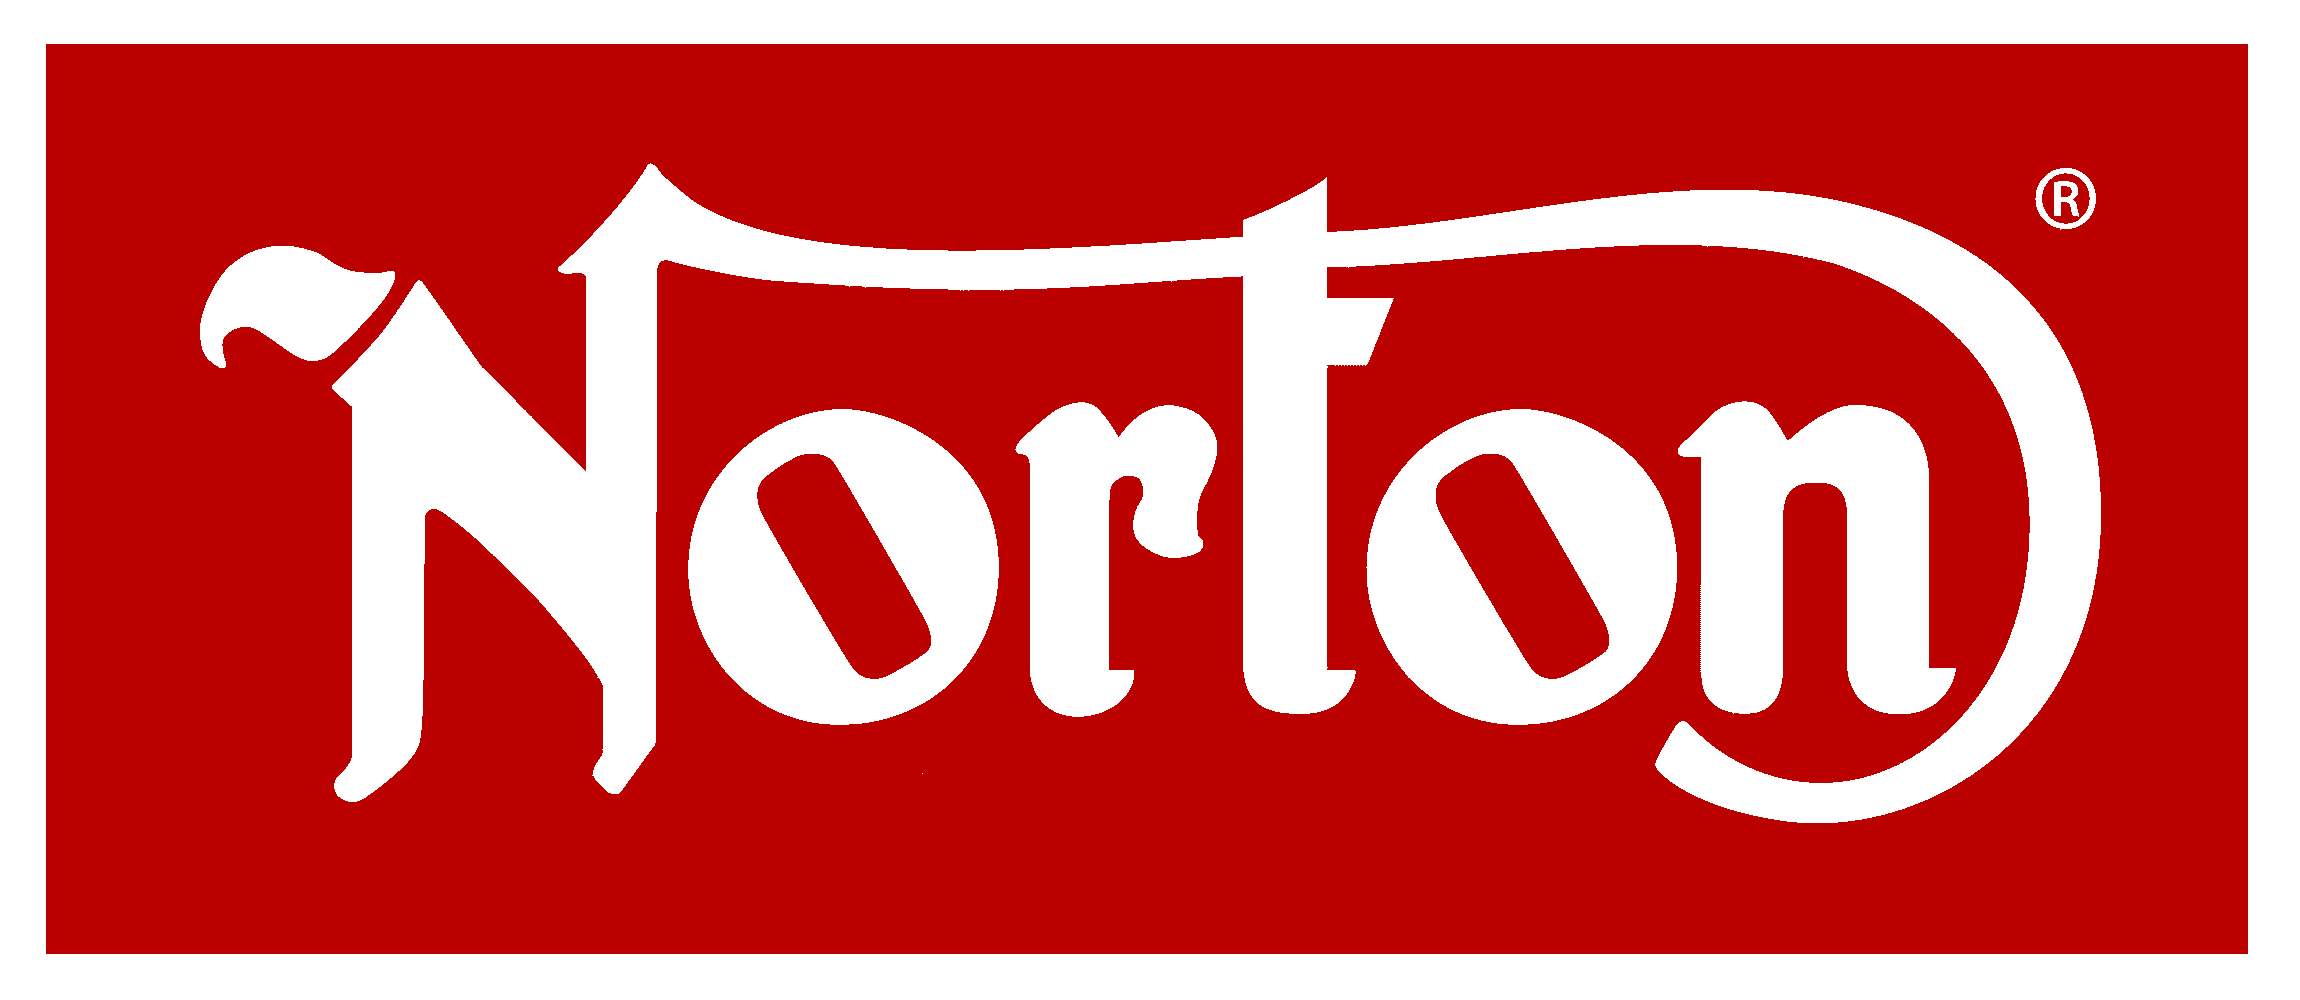 Norton Motorcycle Logo